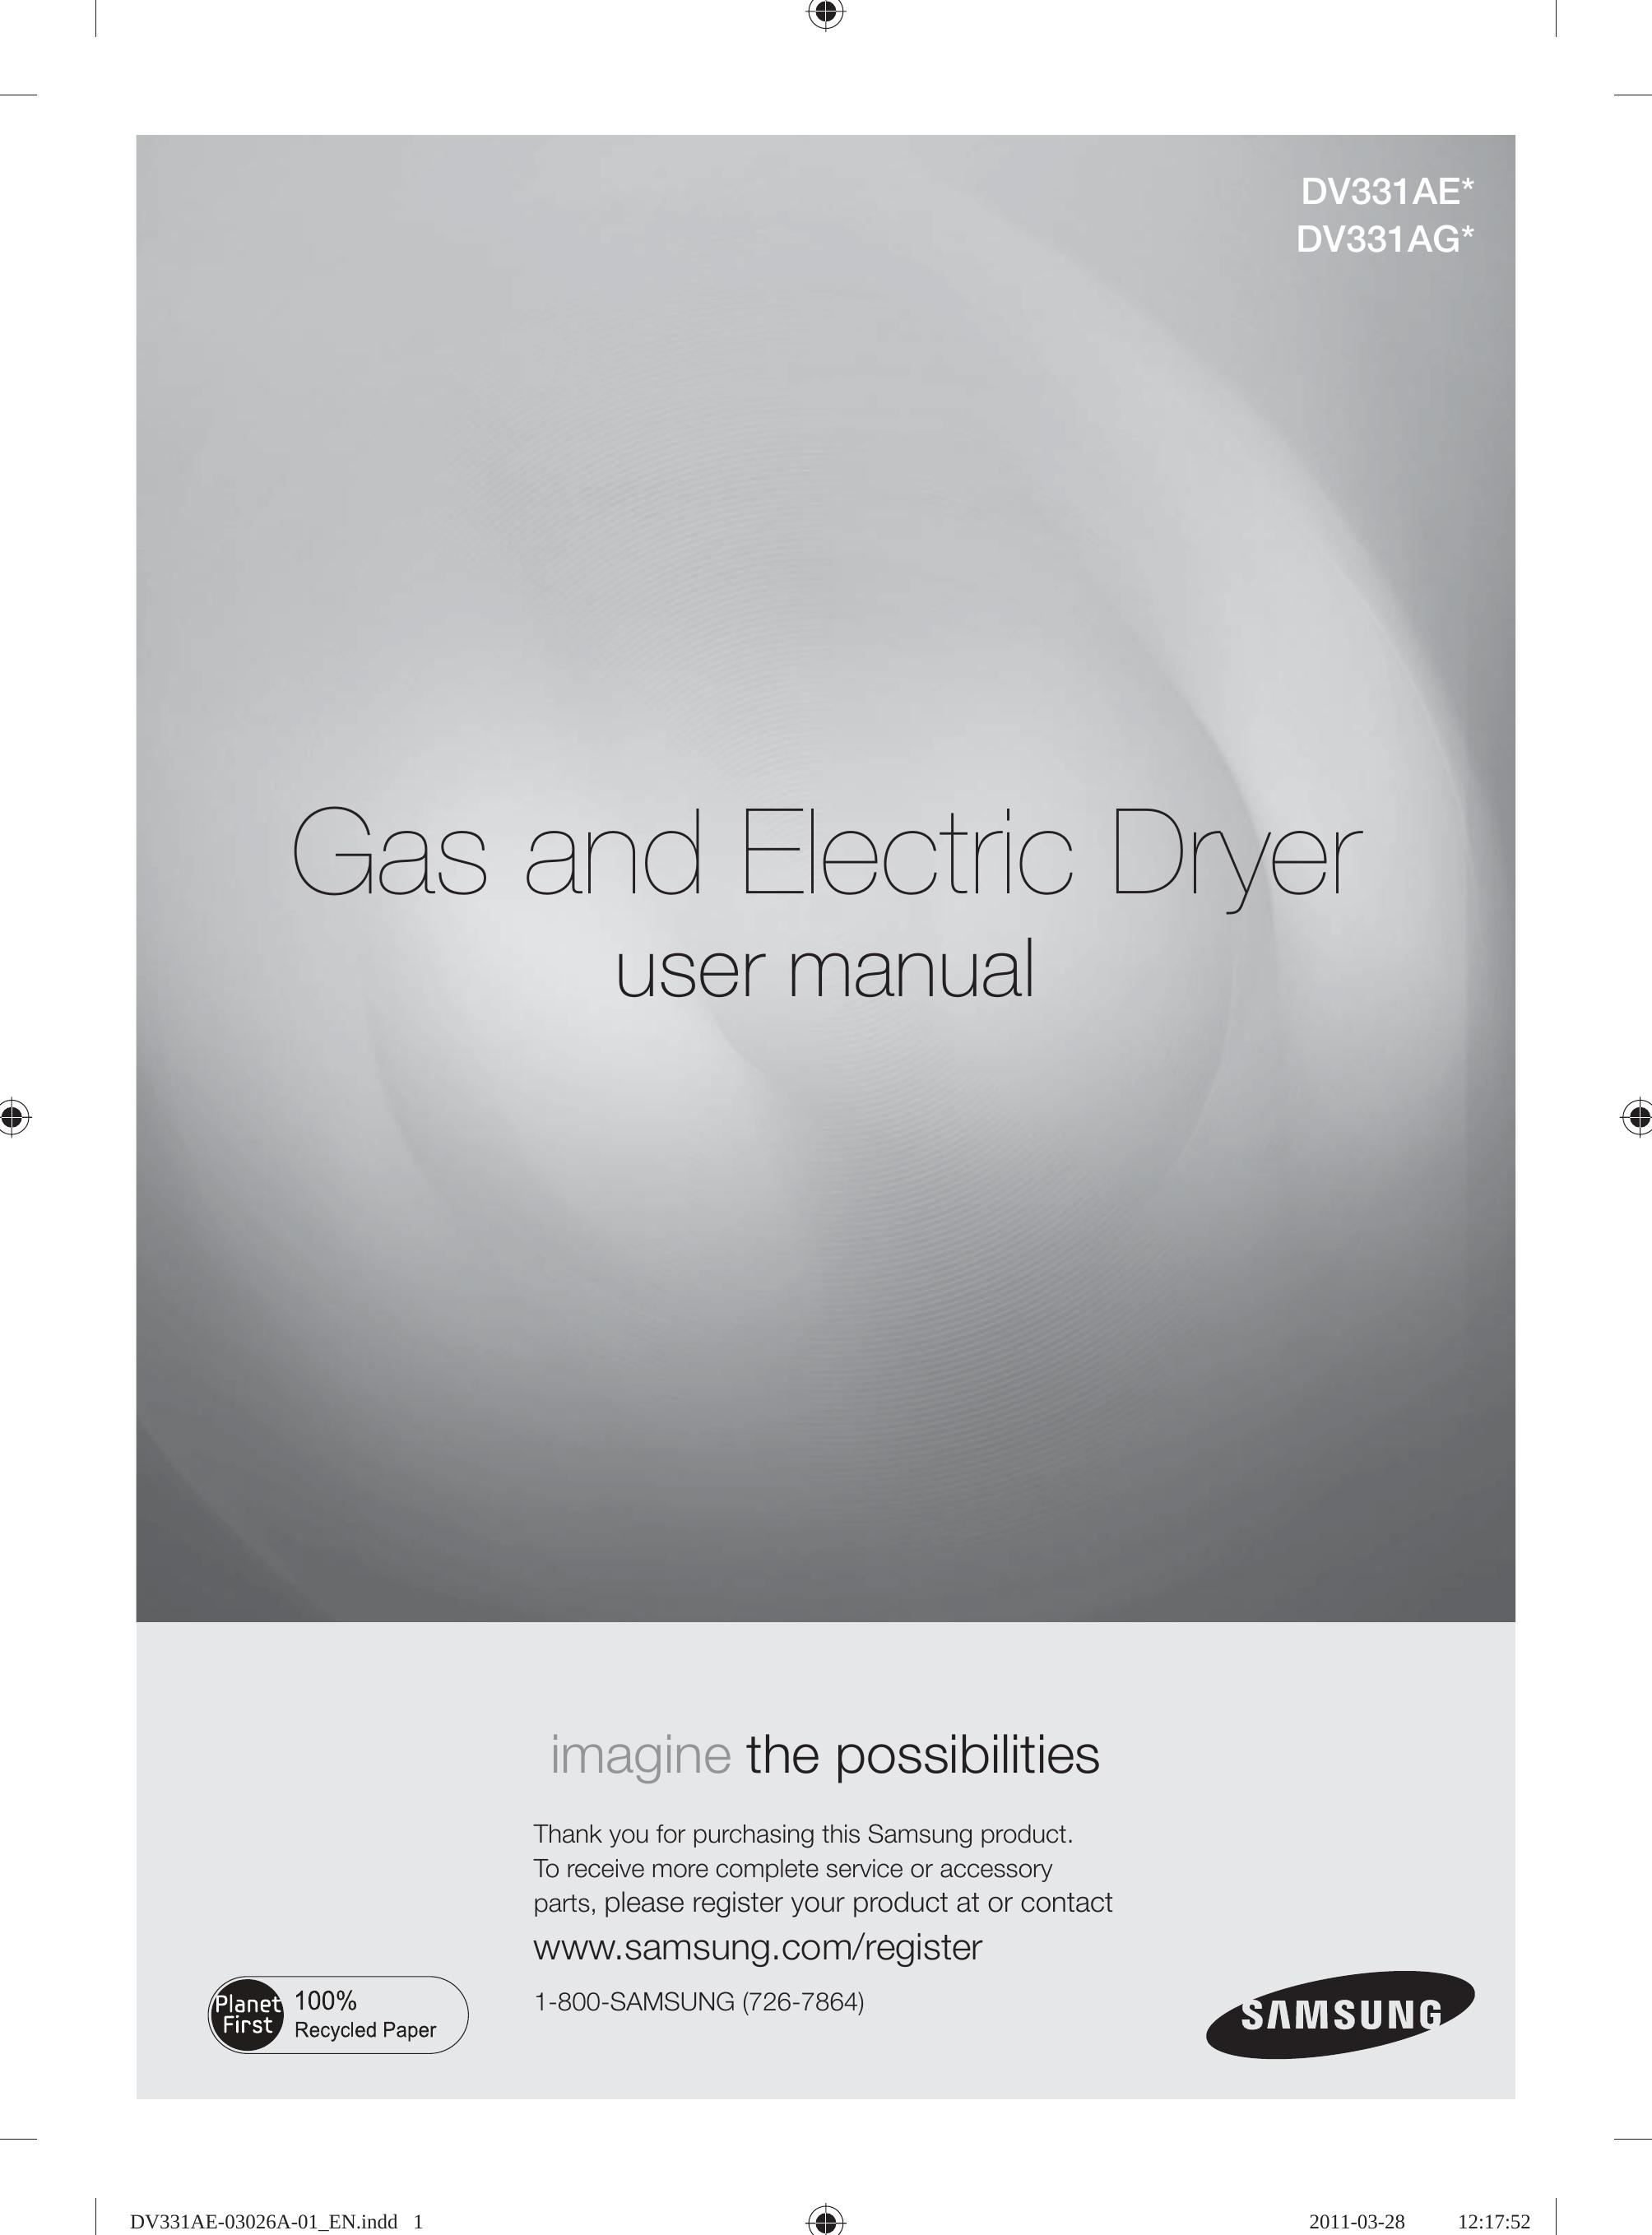 Samsung DV331AE Clothes Dryer User Manual